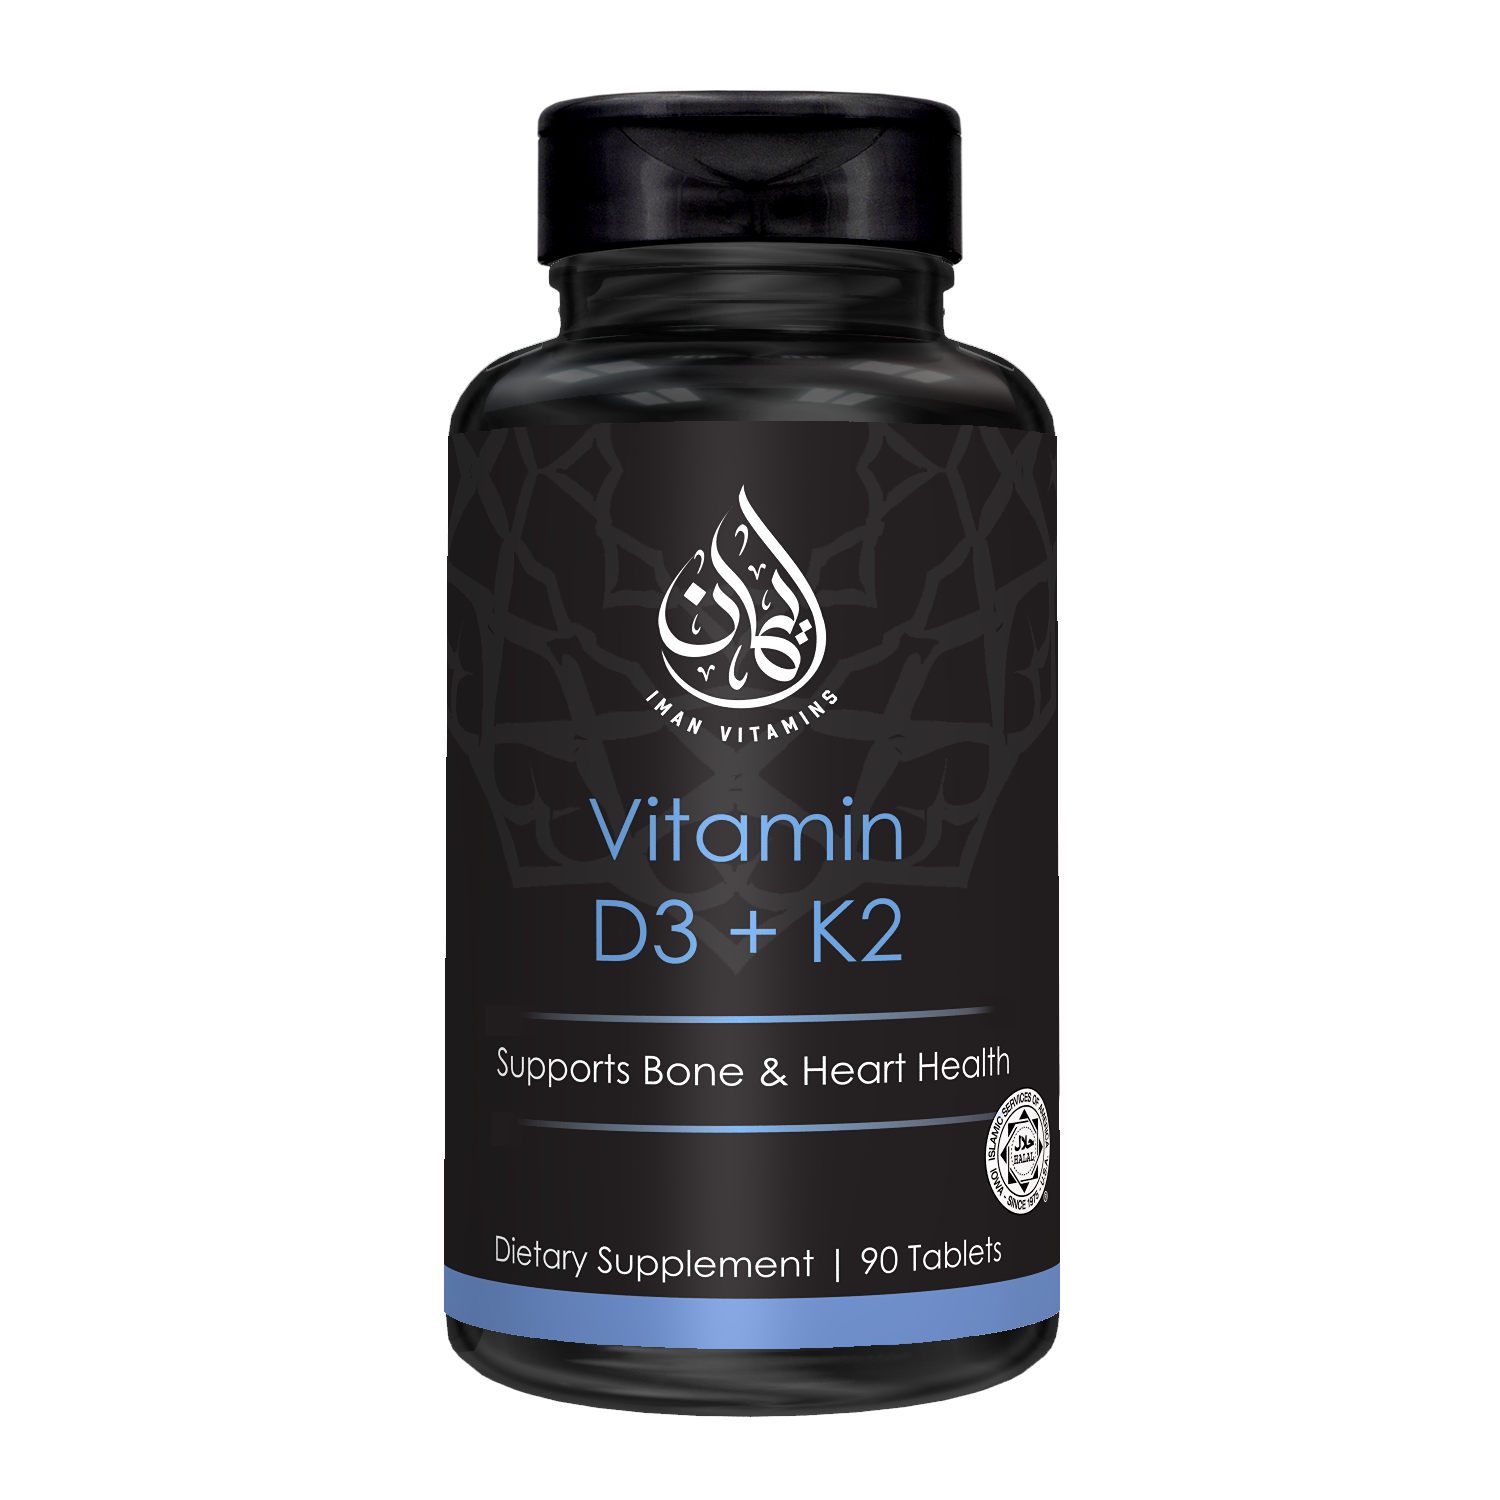 Halal Vitamin D3 + K2 - Iman Vitamins